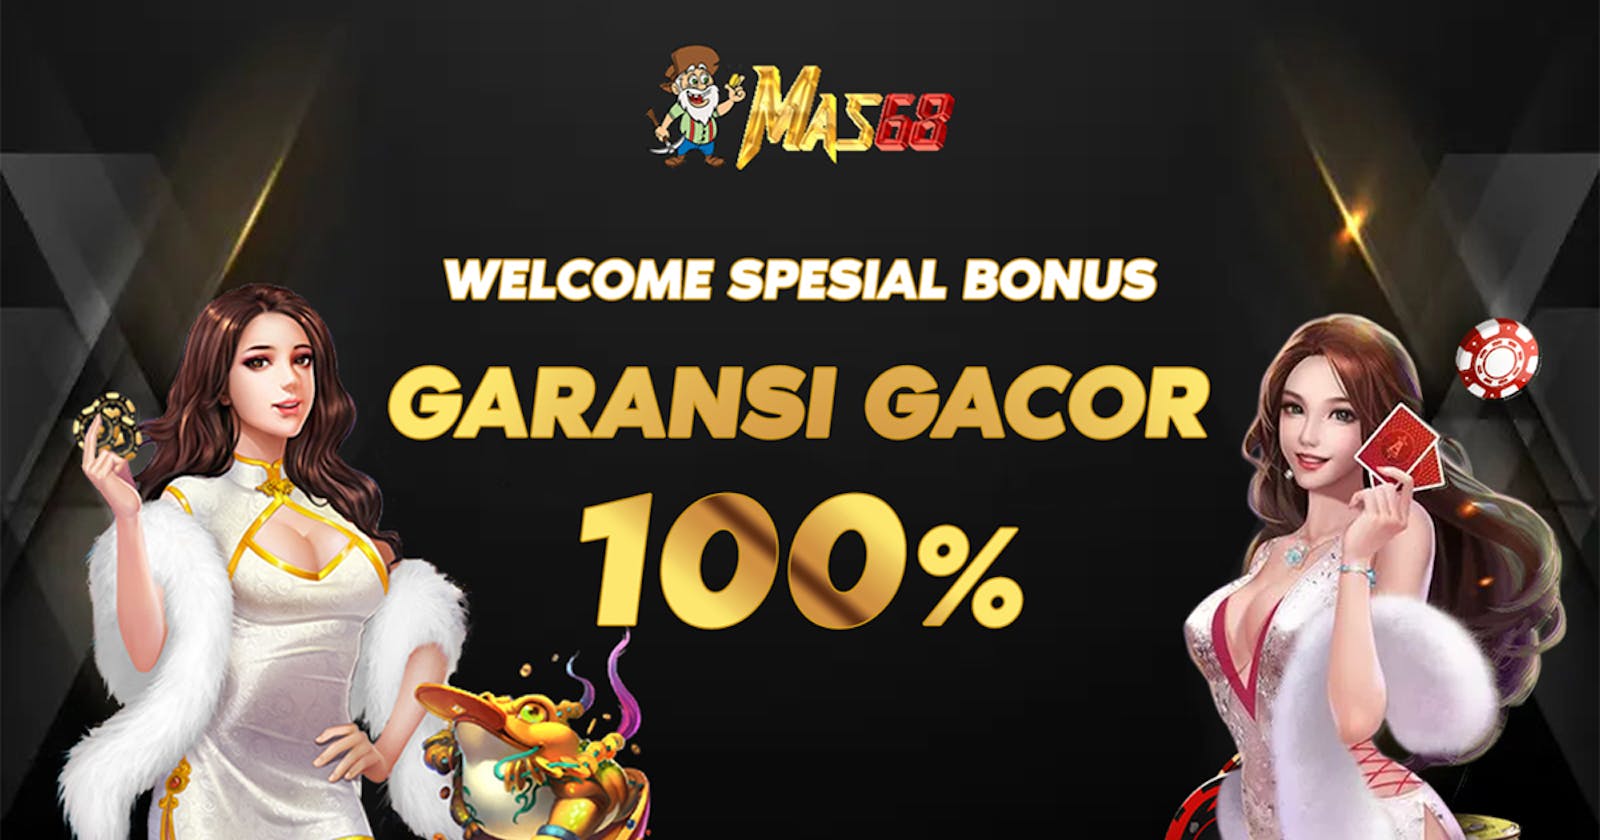 Daftar Slot Gacor Mas68 Garansi Maxwin 100%